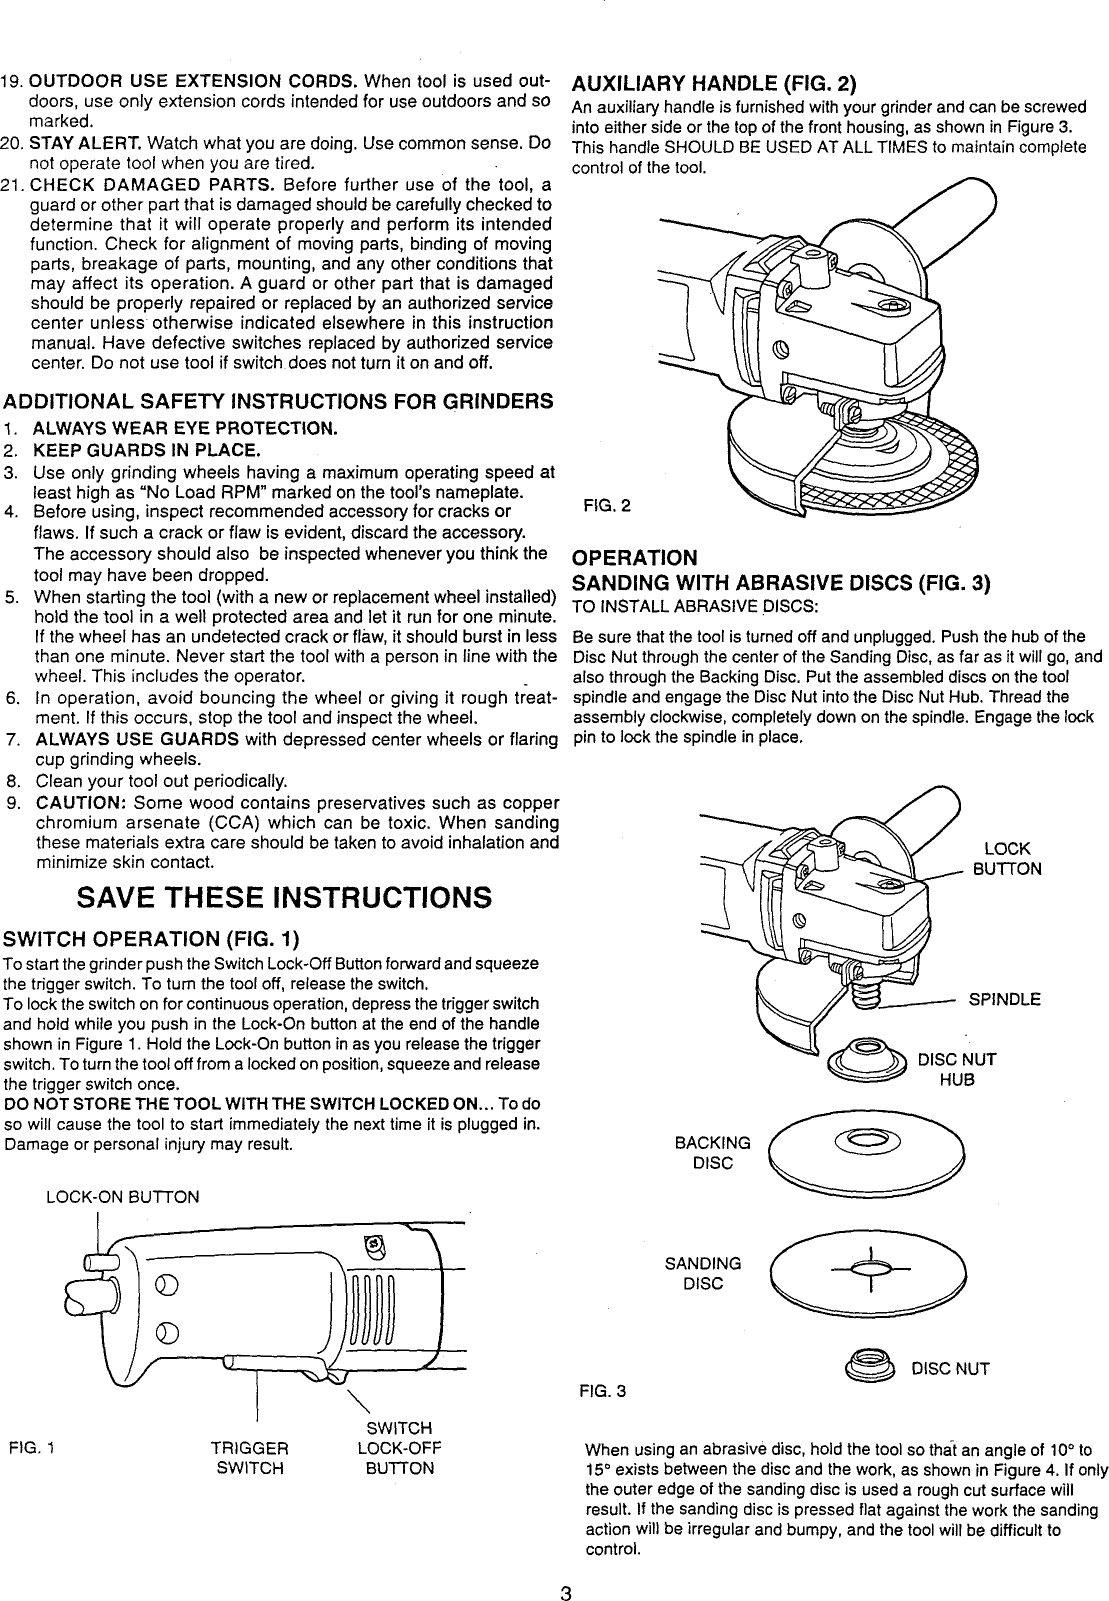 Mill user manual